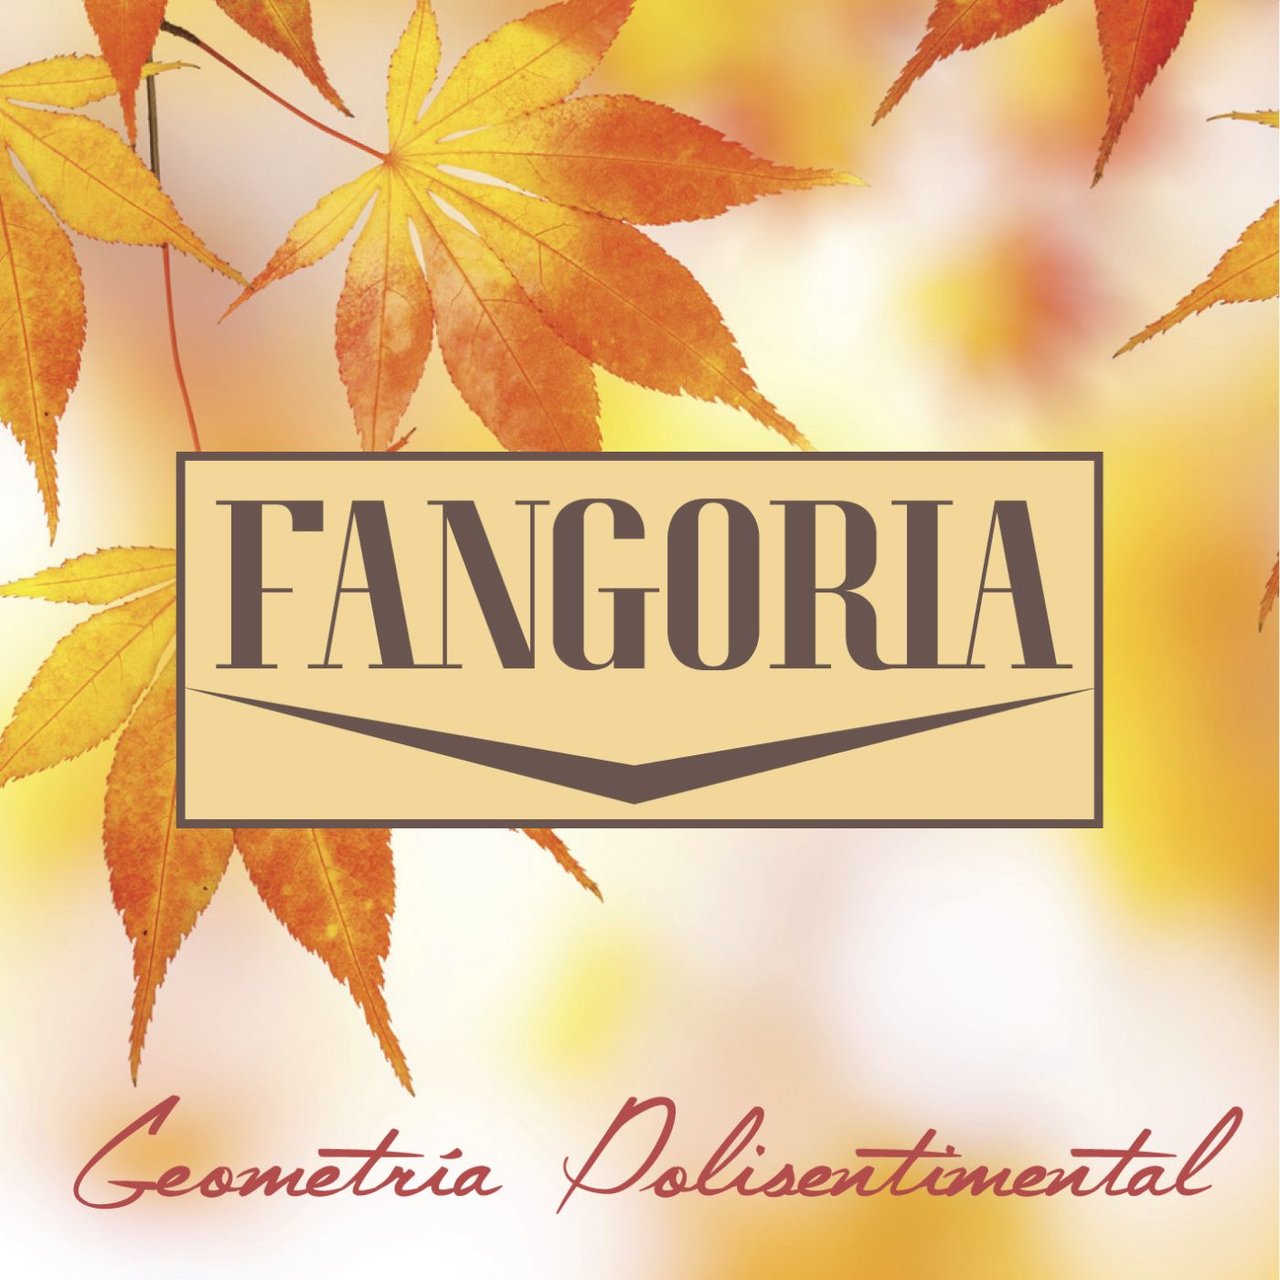 Fangoria Geometría polisentimental cover artwork